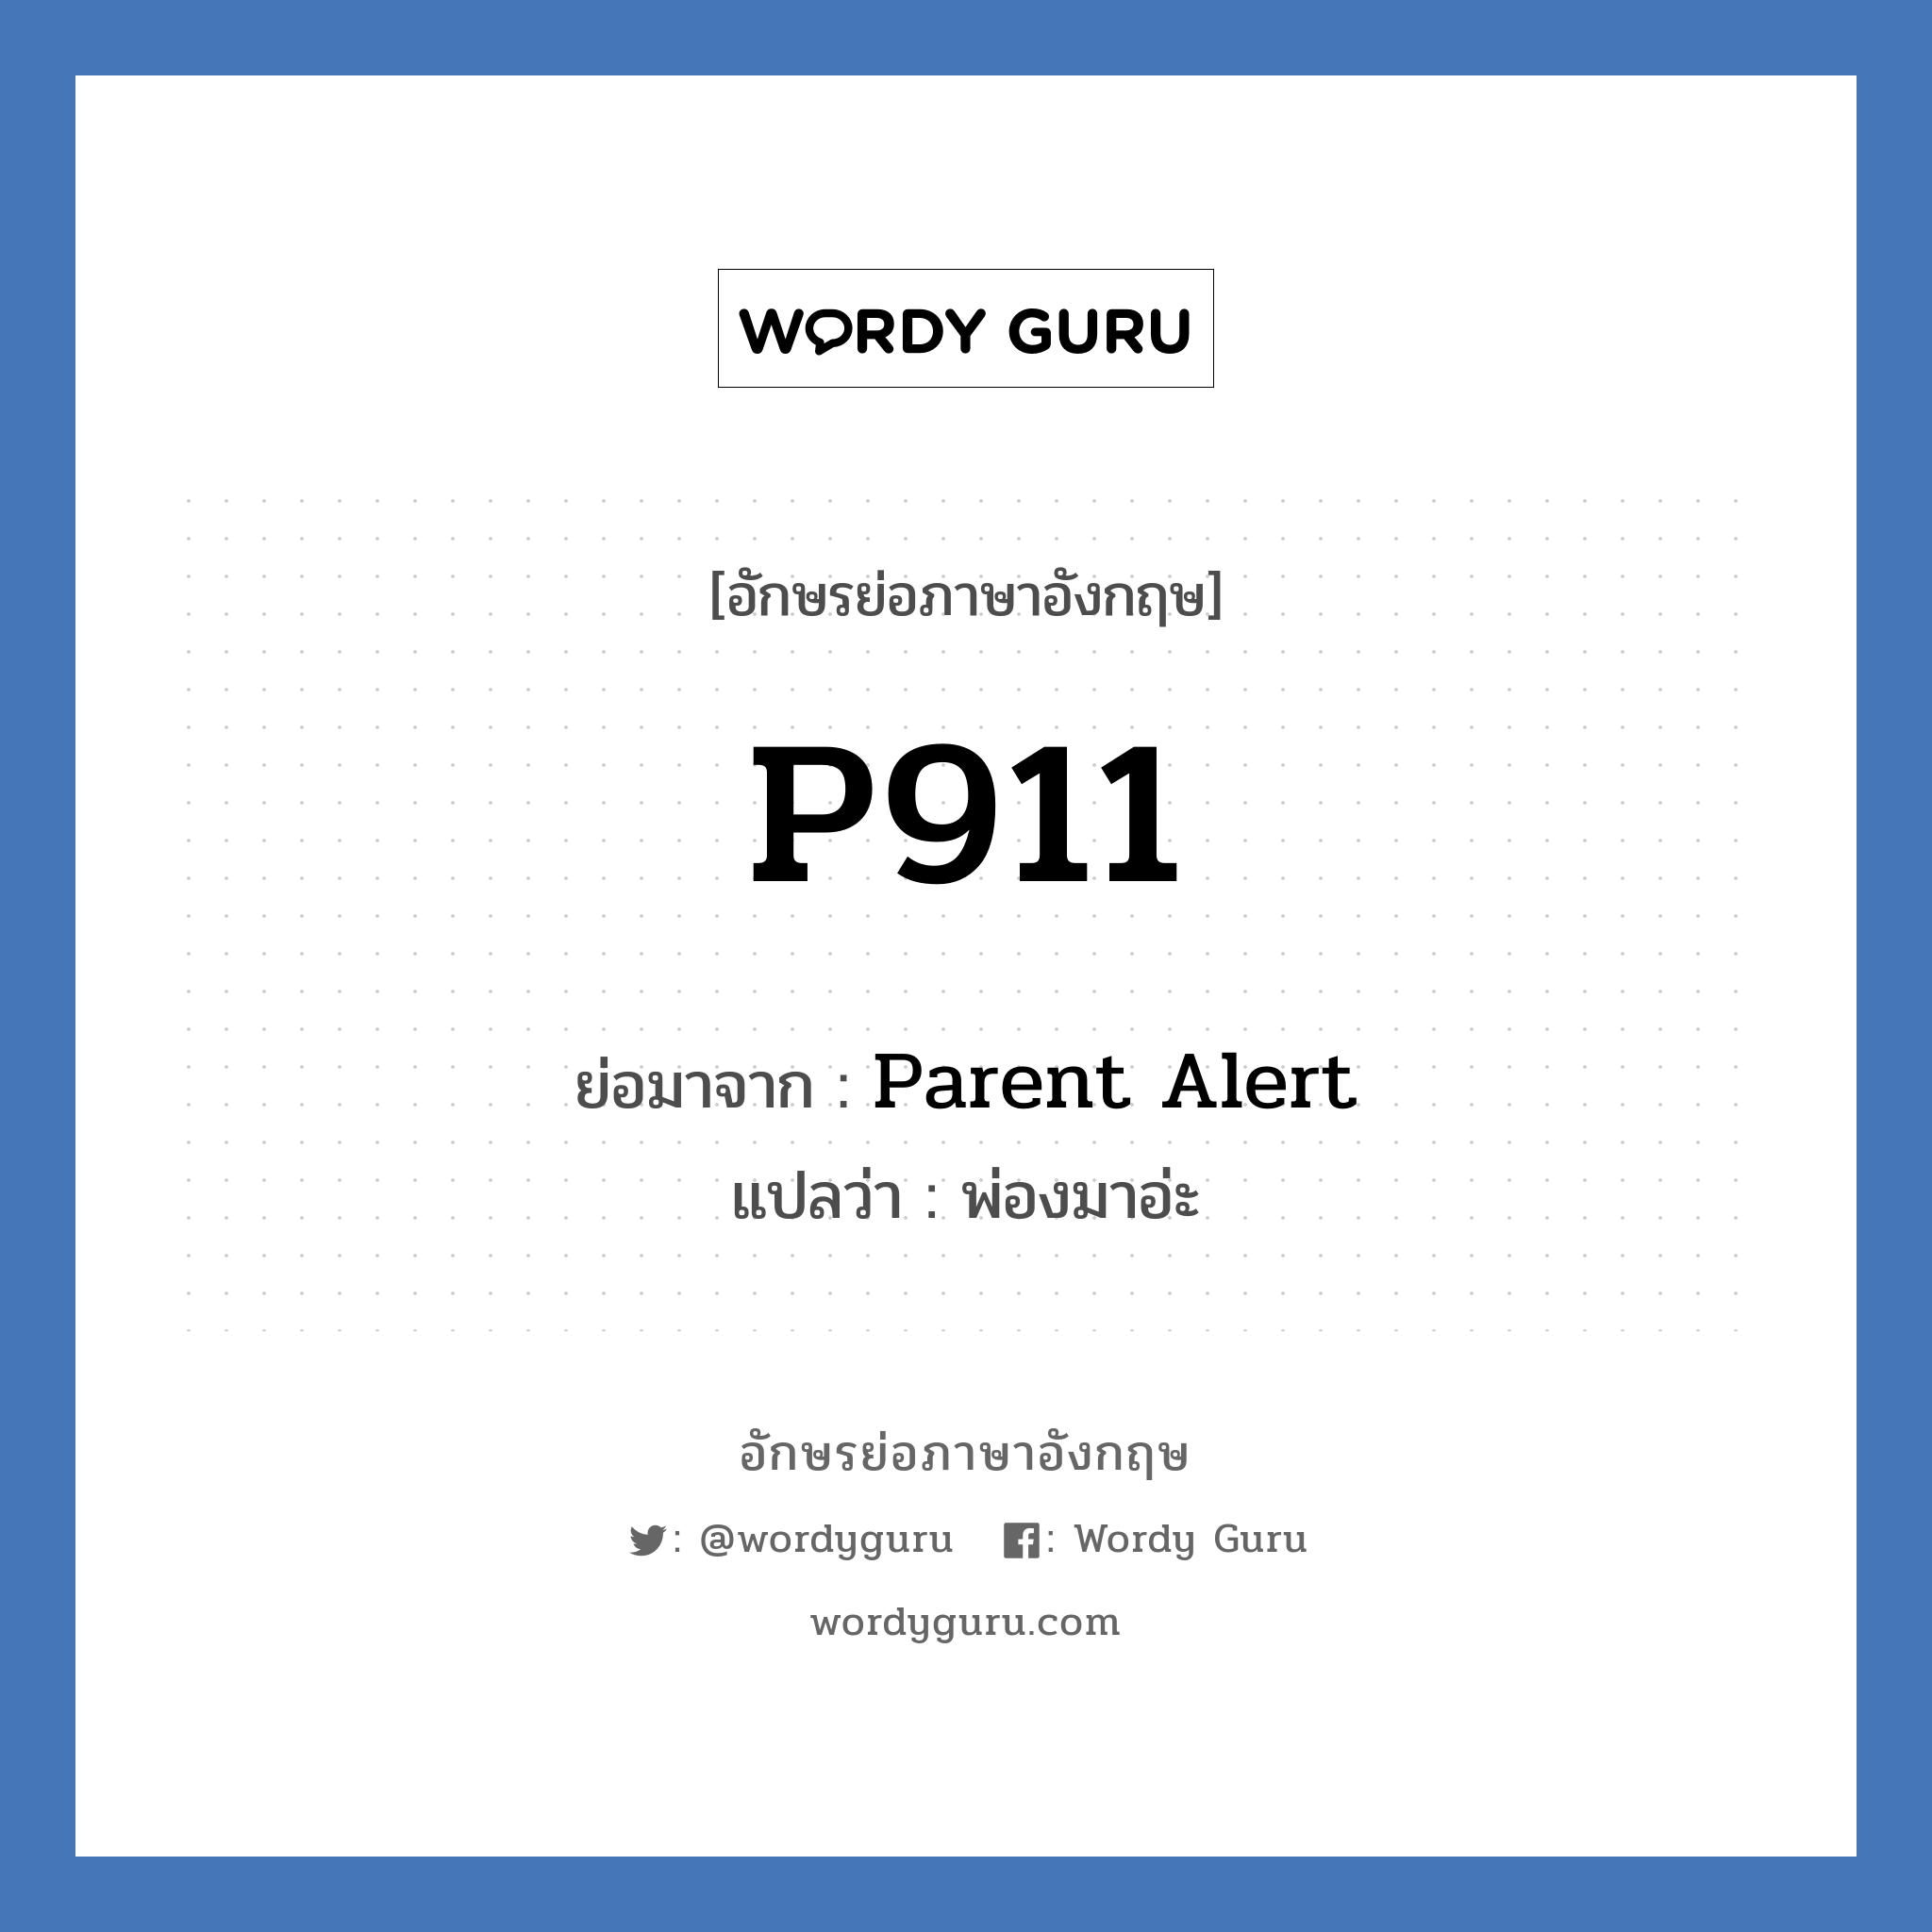 Parent Alert คำย่อคือ? แปลว่า?, อักษรย่อภาษาอังกฤษ Parent Alert ย่อมาจาก P911 แปลว่า พ่องมาอ่ะ